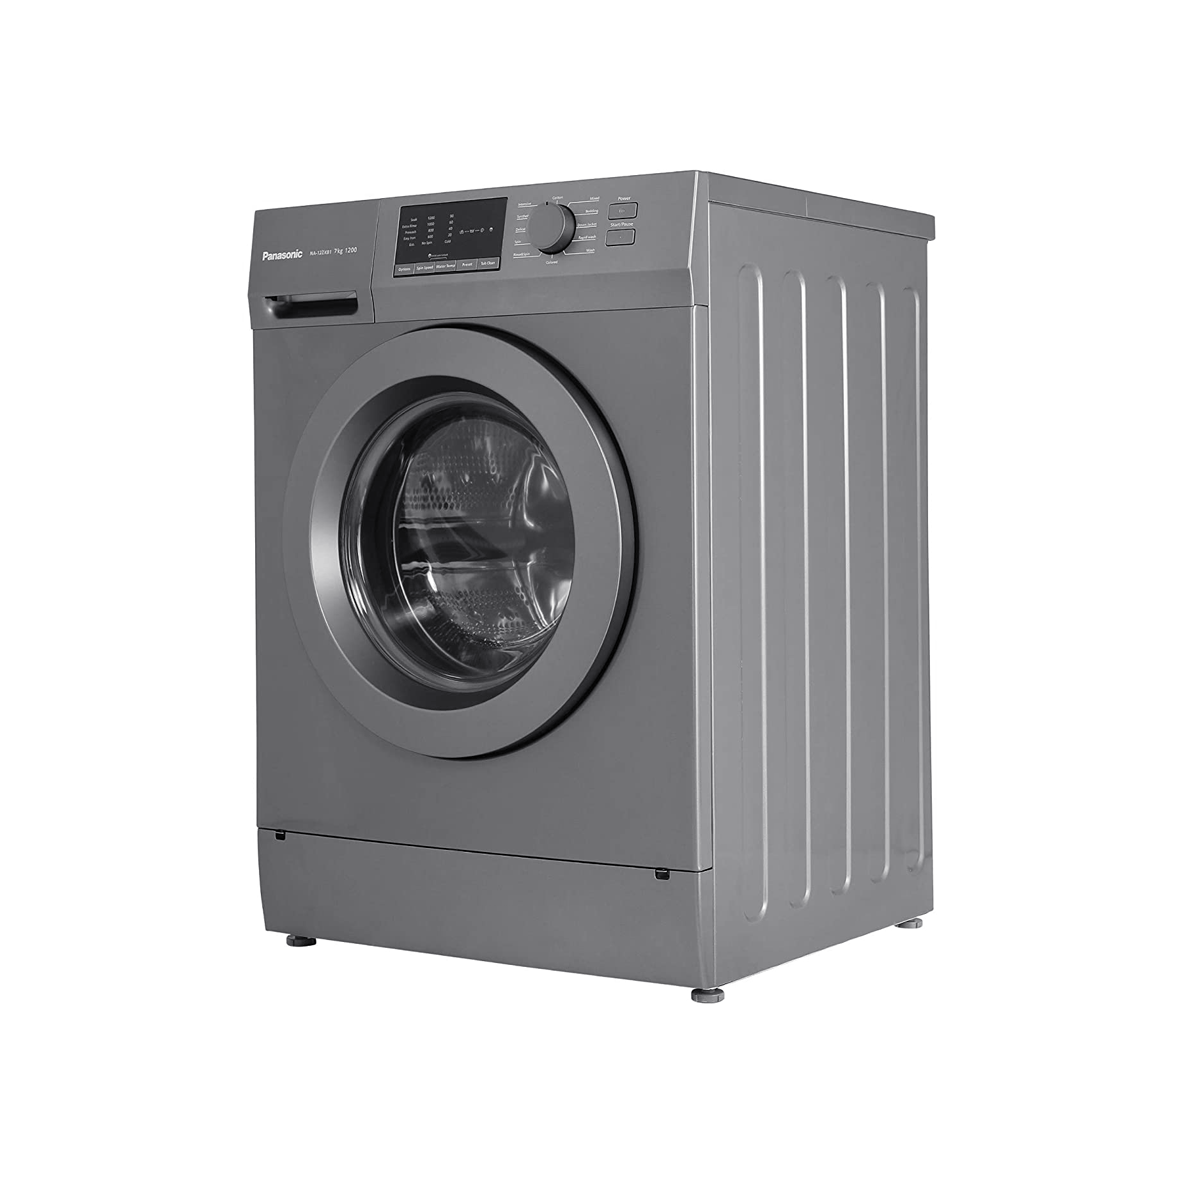 Panasonic 7 KG Front Loading Washing Machine